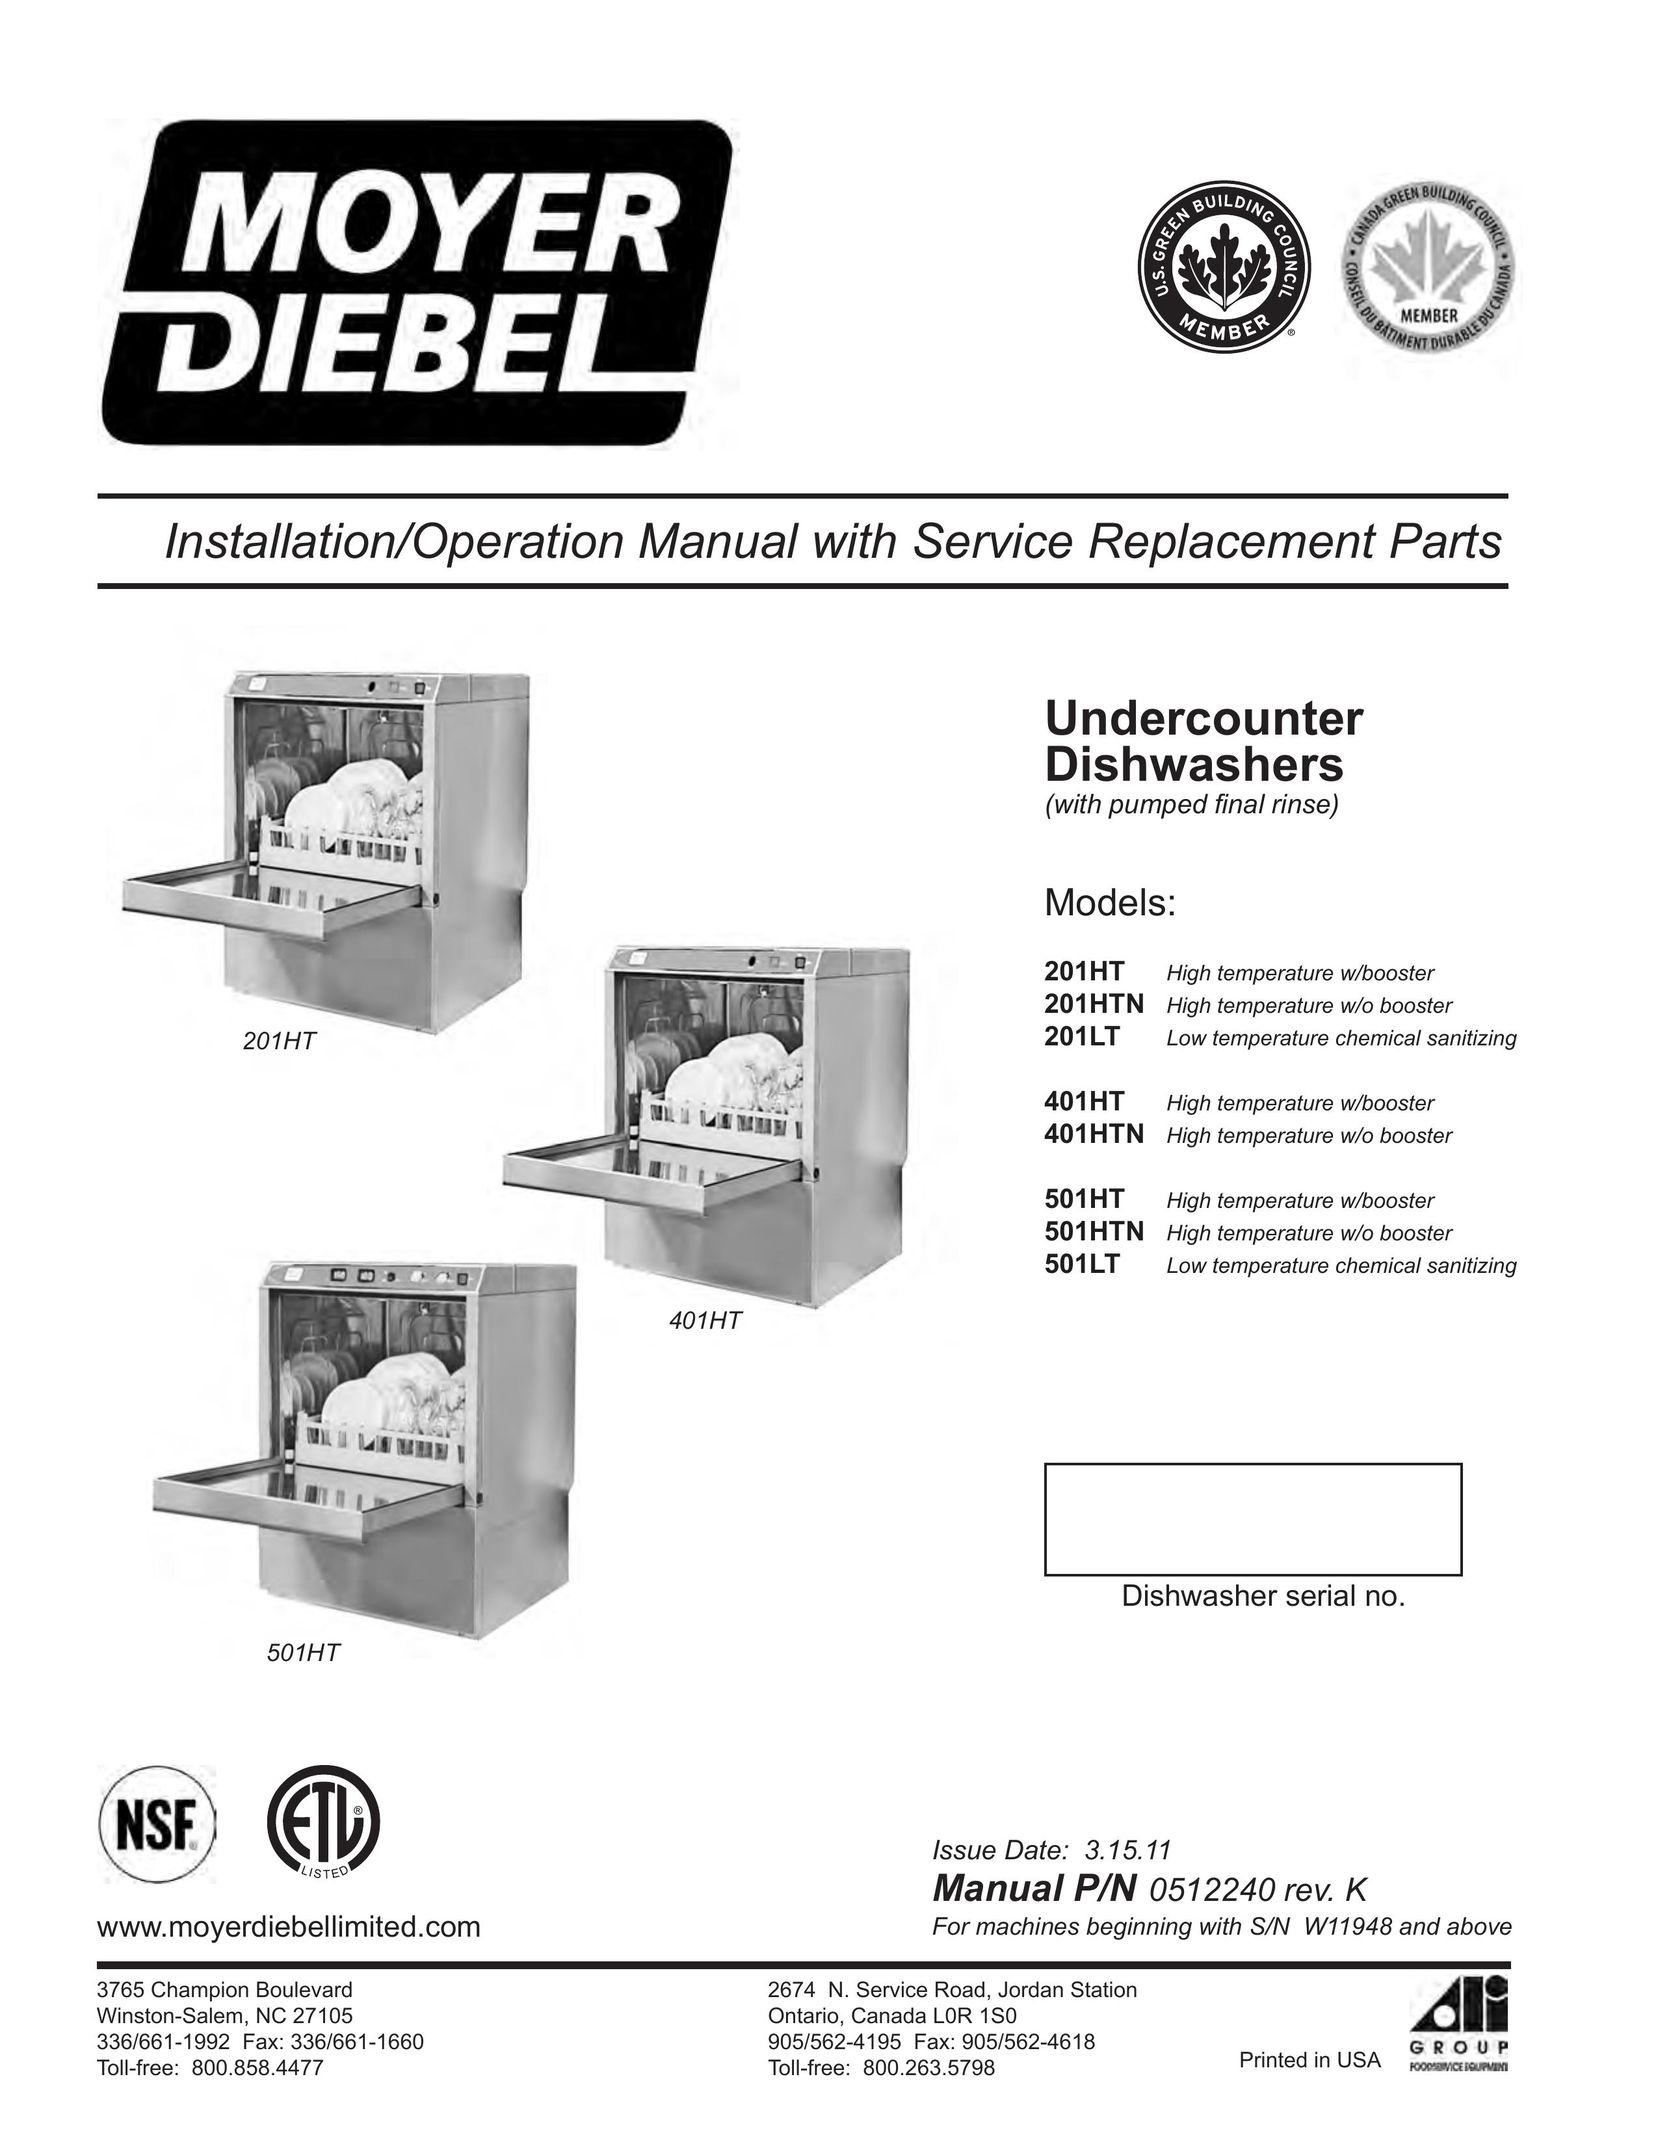 Moyer Diebel 401HT Dishwasher User Manual